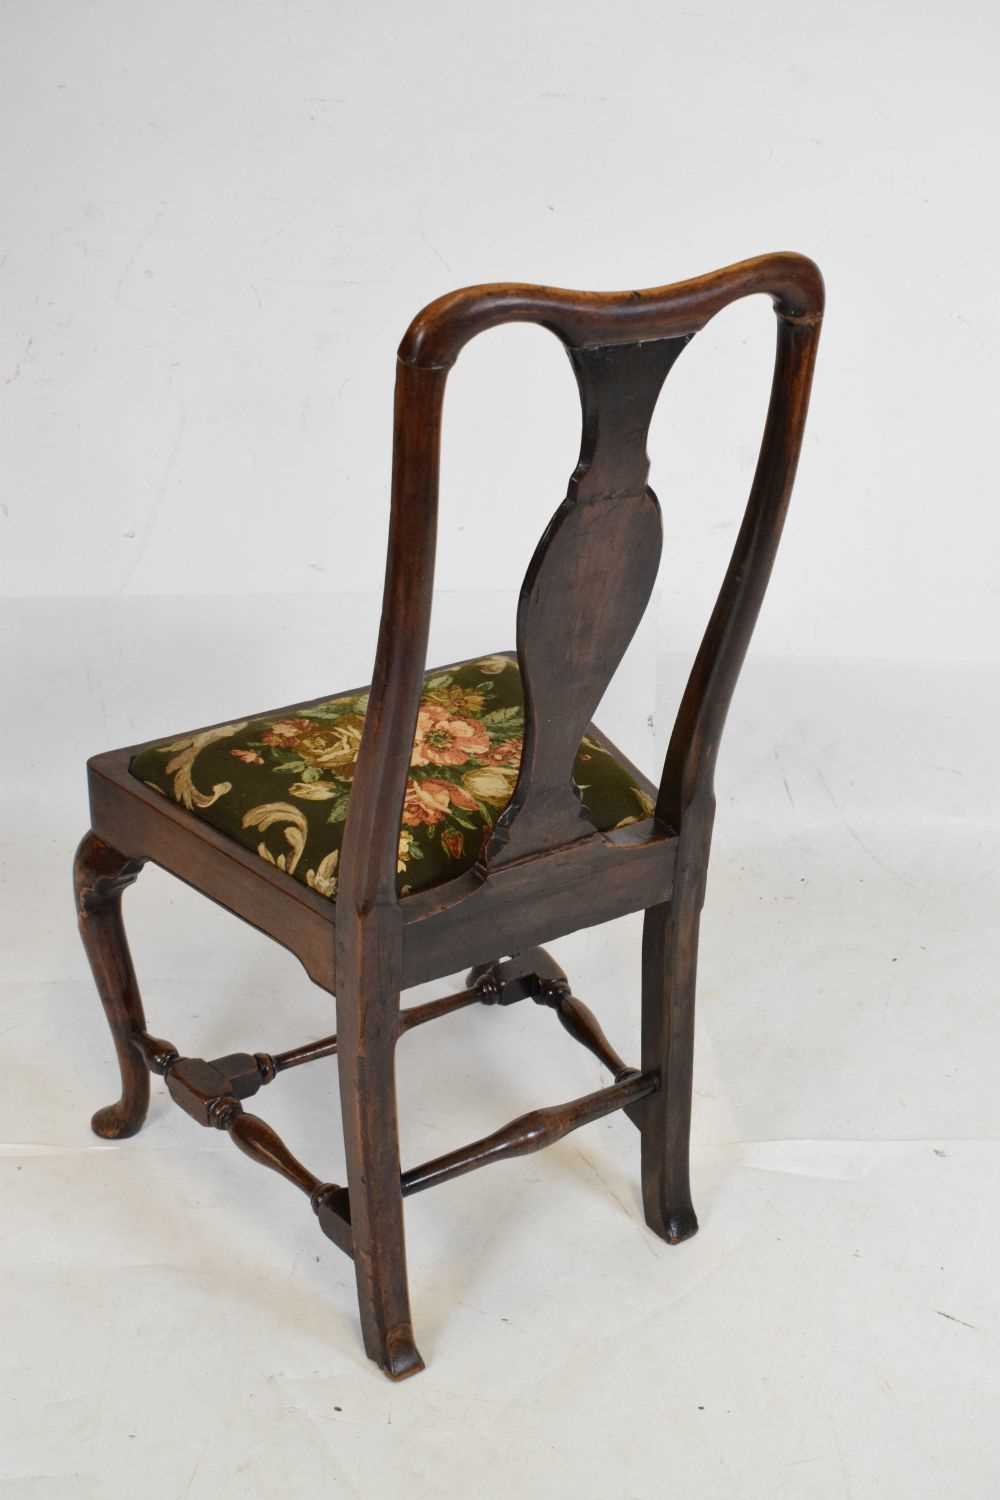 Queen Anne walnut splat back chair - Image 4 of 7